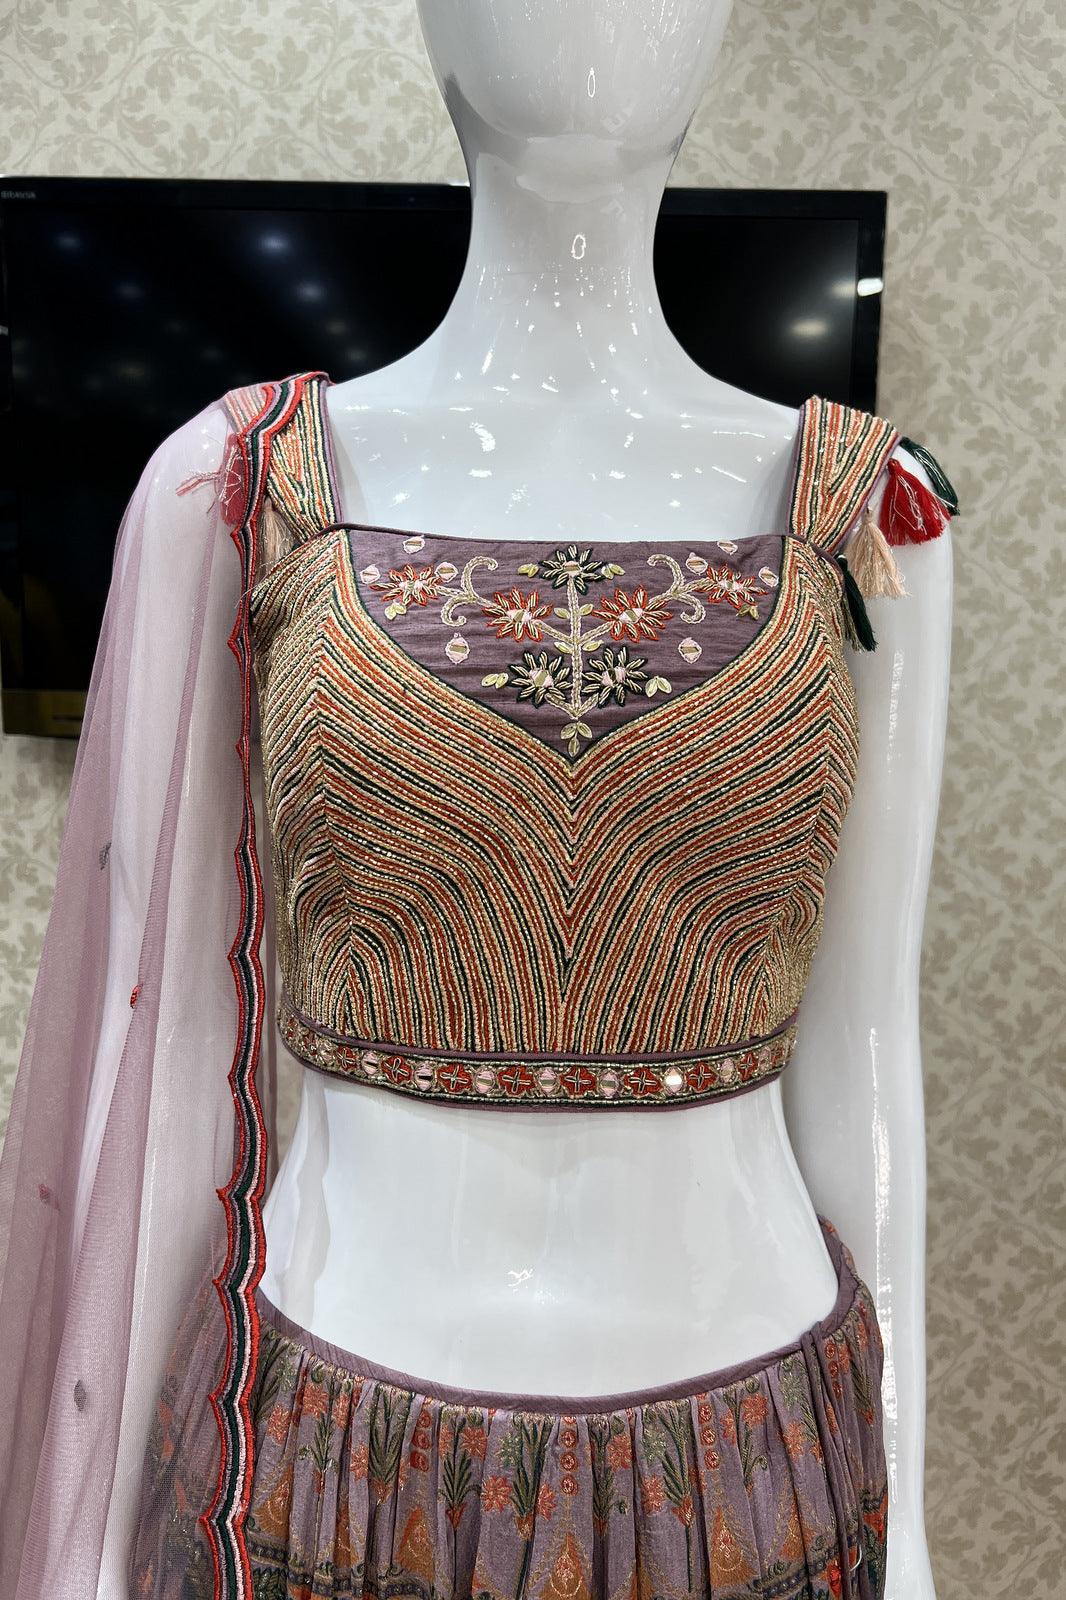 Onion Pink with Dark Grey Banaras, Beads, Zardozi and Mirror work Crop Top Lehenga - Seasons Chennai